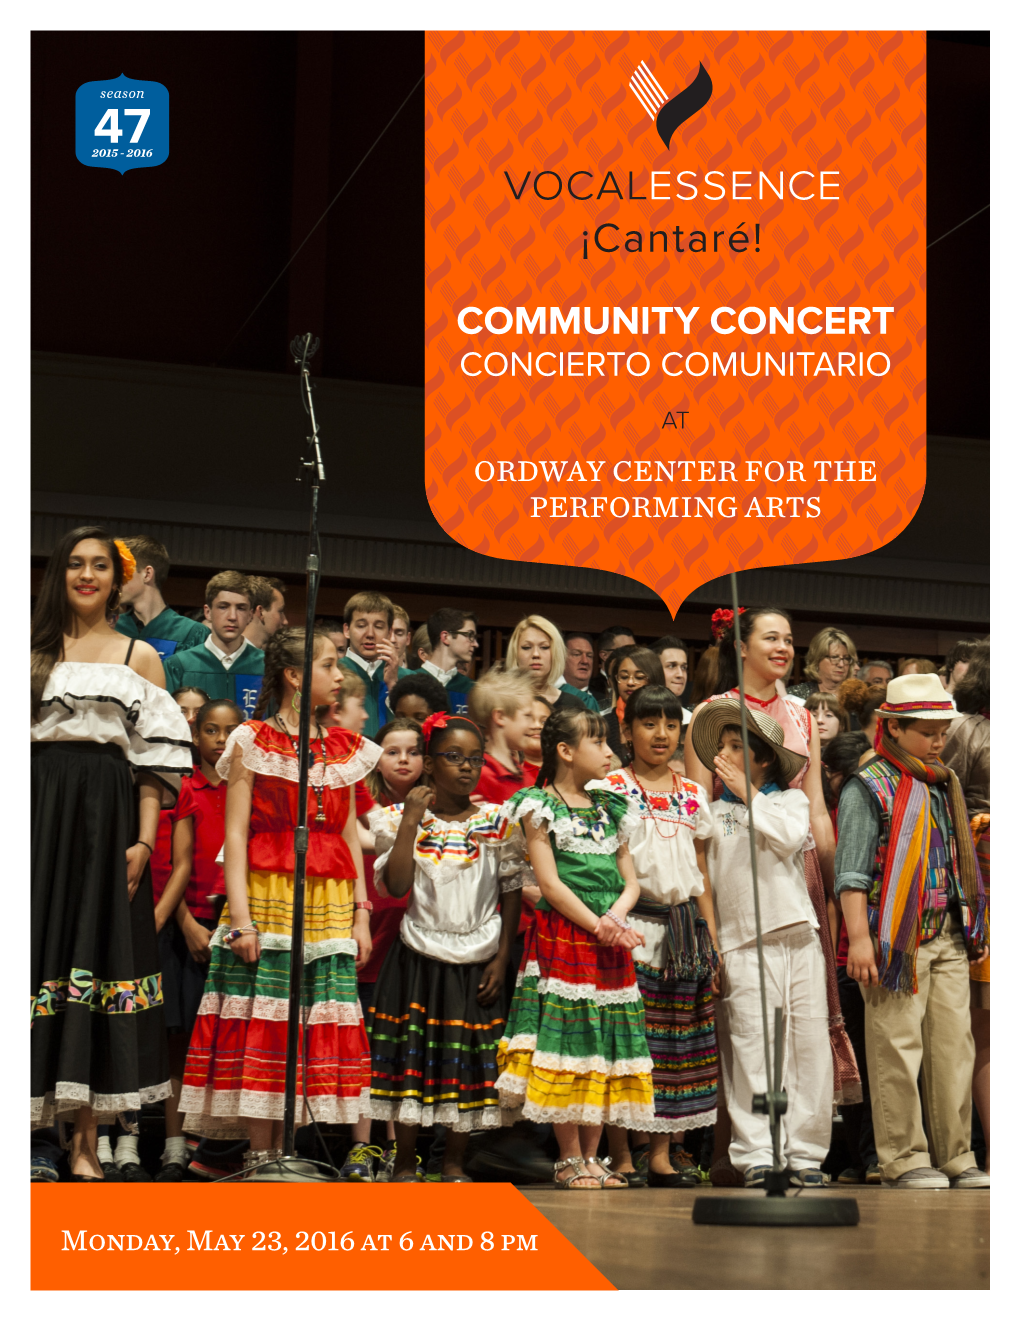 Community Concert Concierto Comunitario at Ordway Center for the Performing Arts